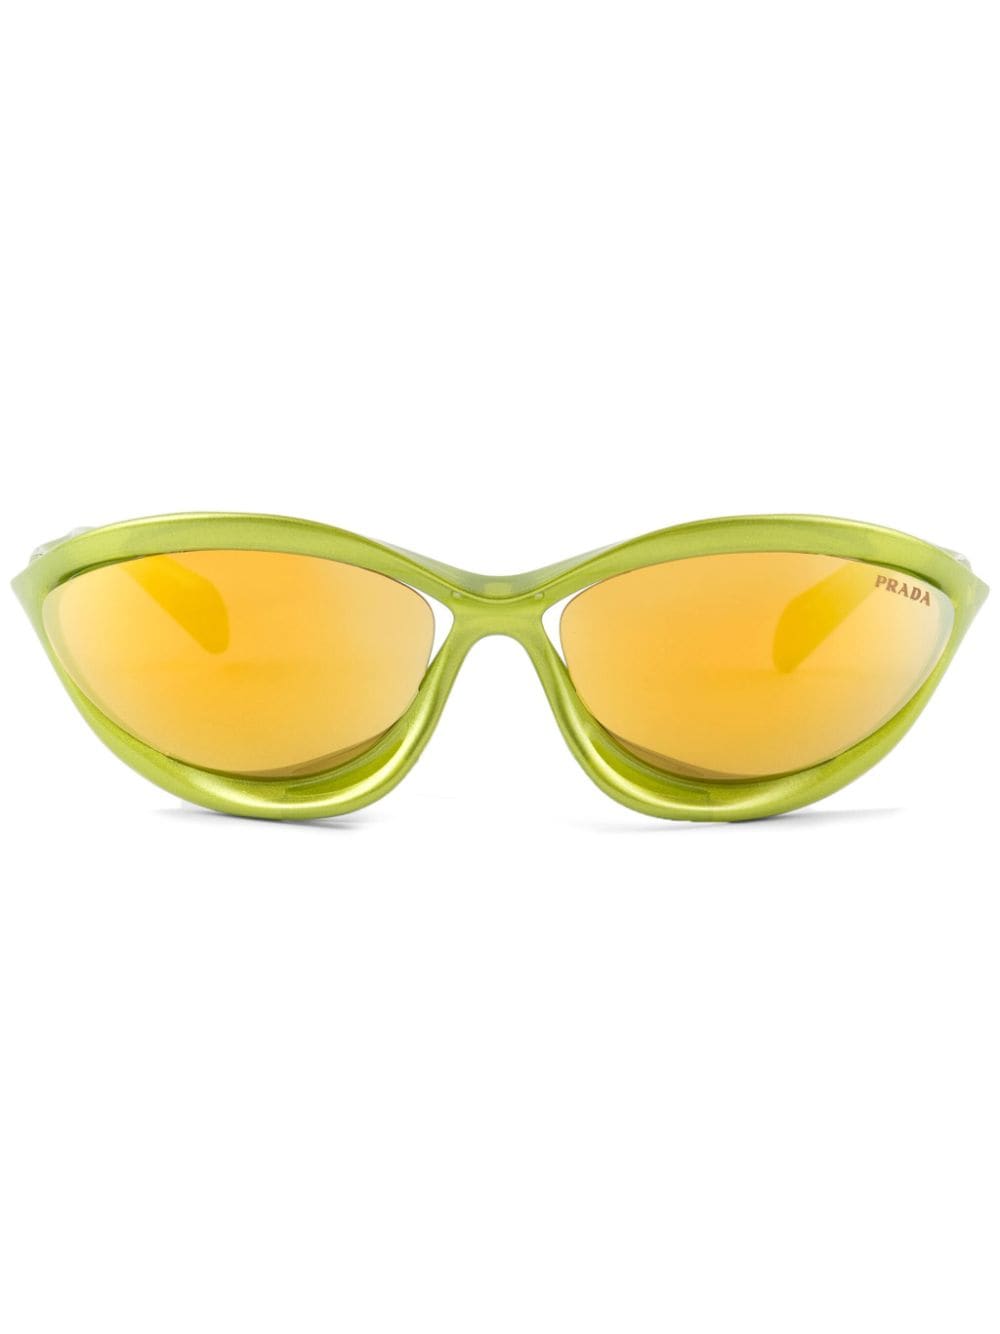 Prada Eyewear Runway sunglasses - Green von Prada Eyewear